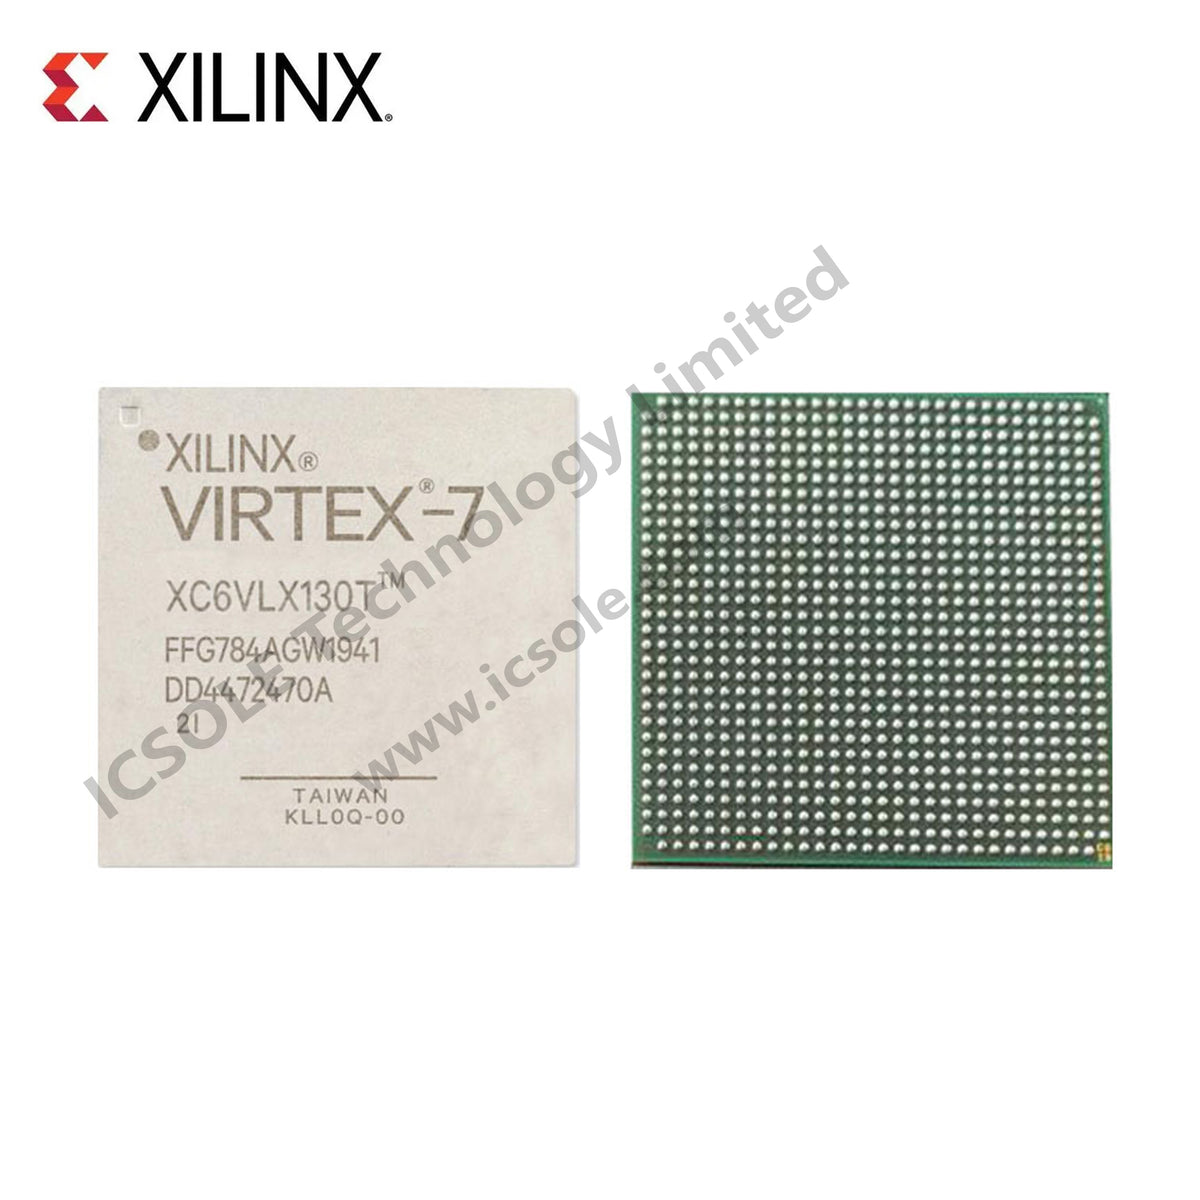 XILINX XC6VLX130T-2FFG784I